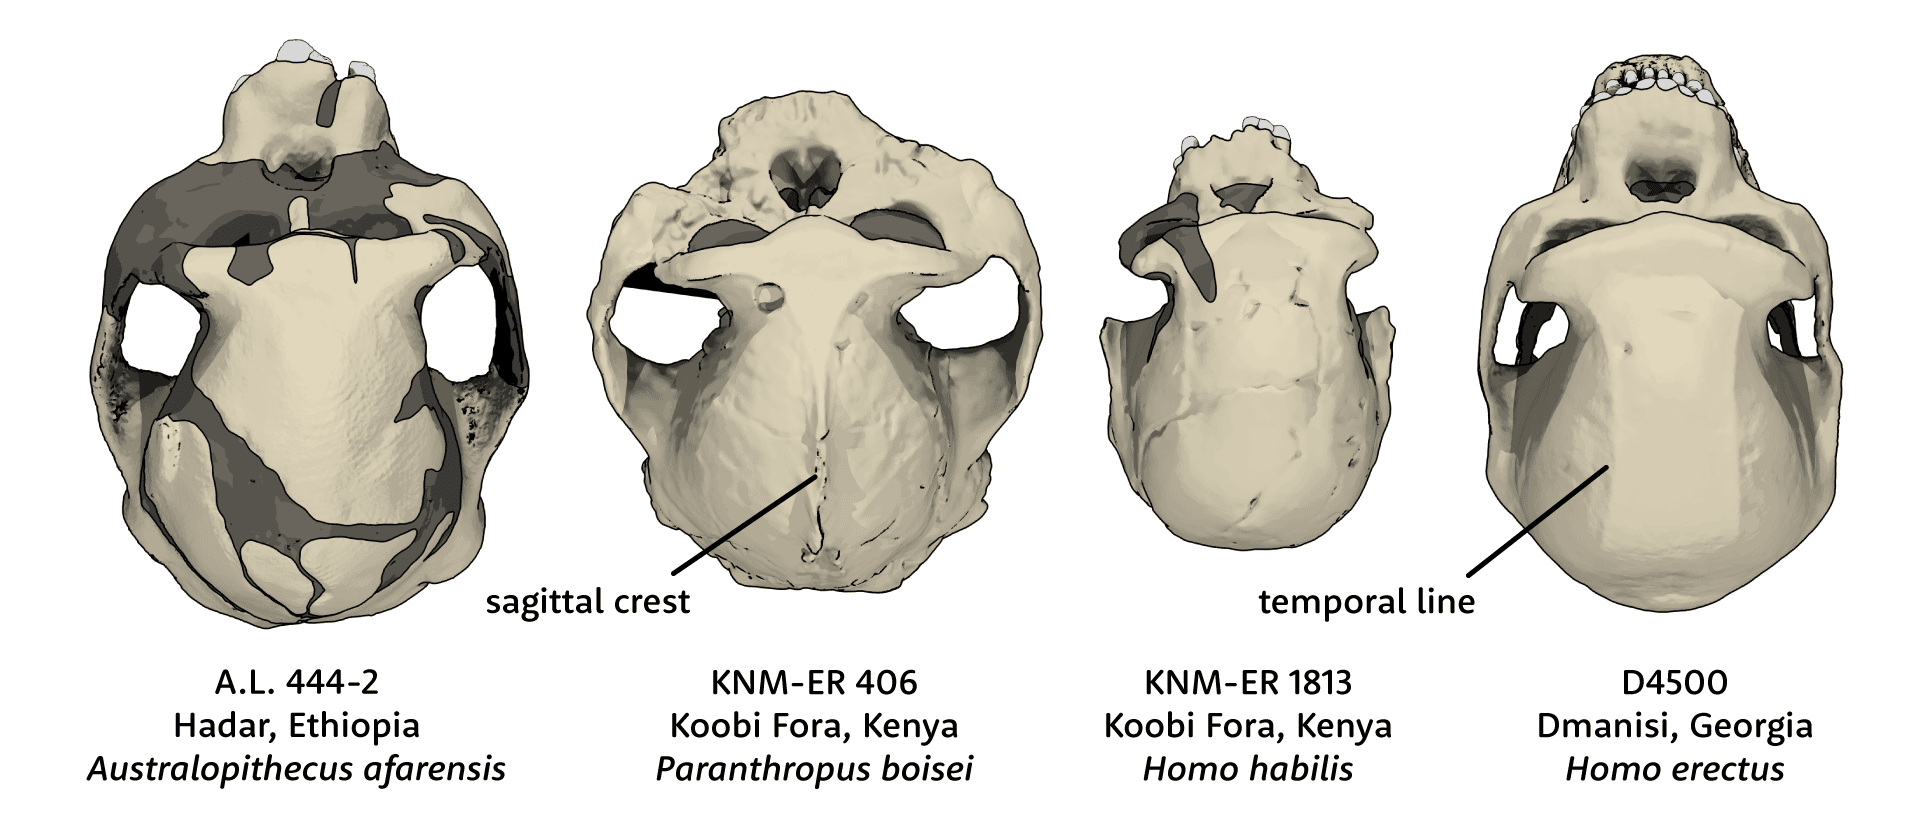 Four skulls from superior view, including AL 444-2 (Australopithecus afarensis, KNM-ER 406 (Paranthropus boisei), KNM-ER 1813 (Homo habilis) and D4500 (Homo erectus)